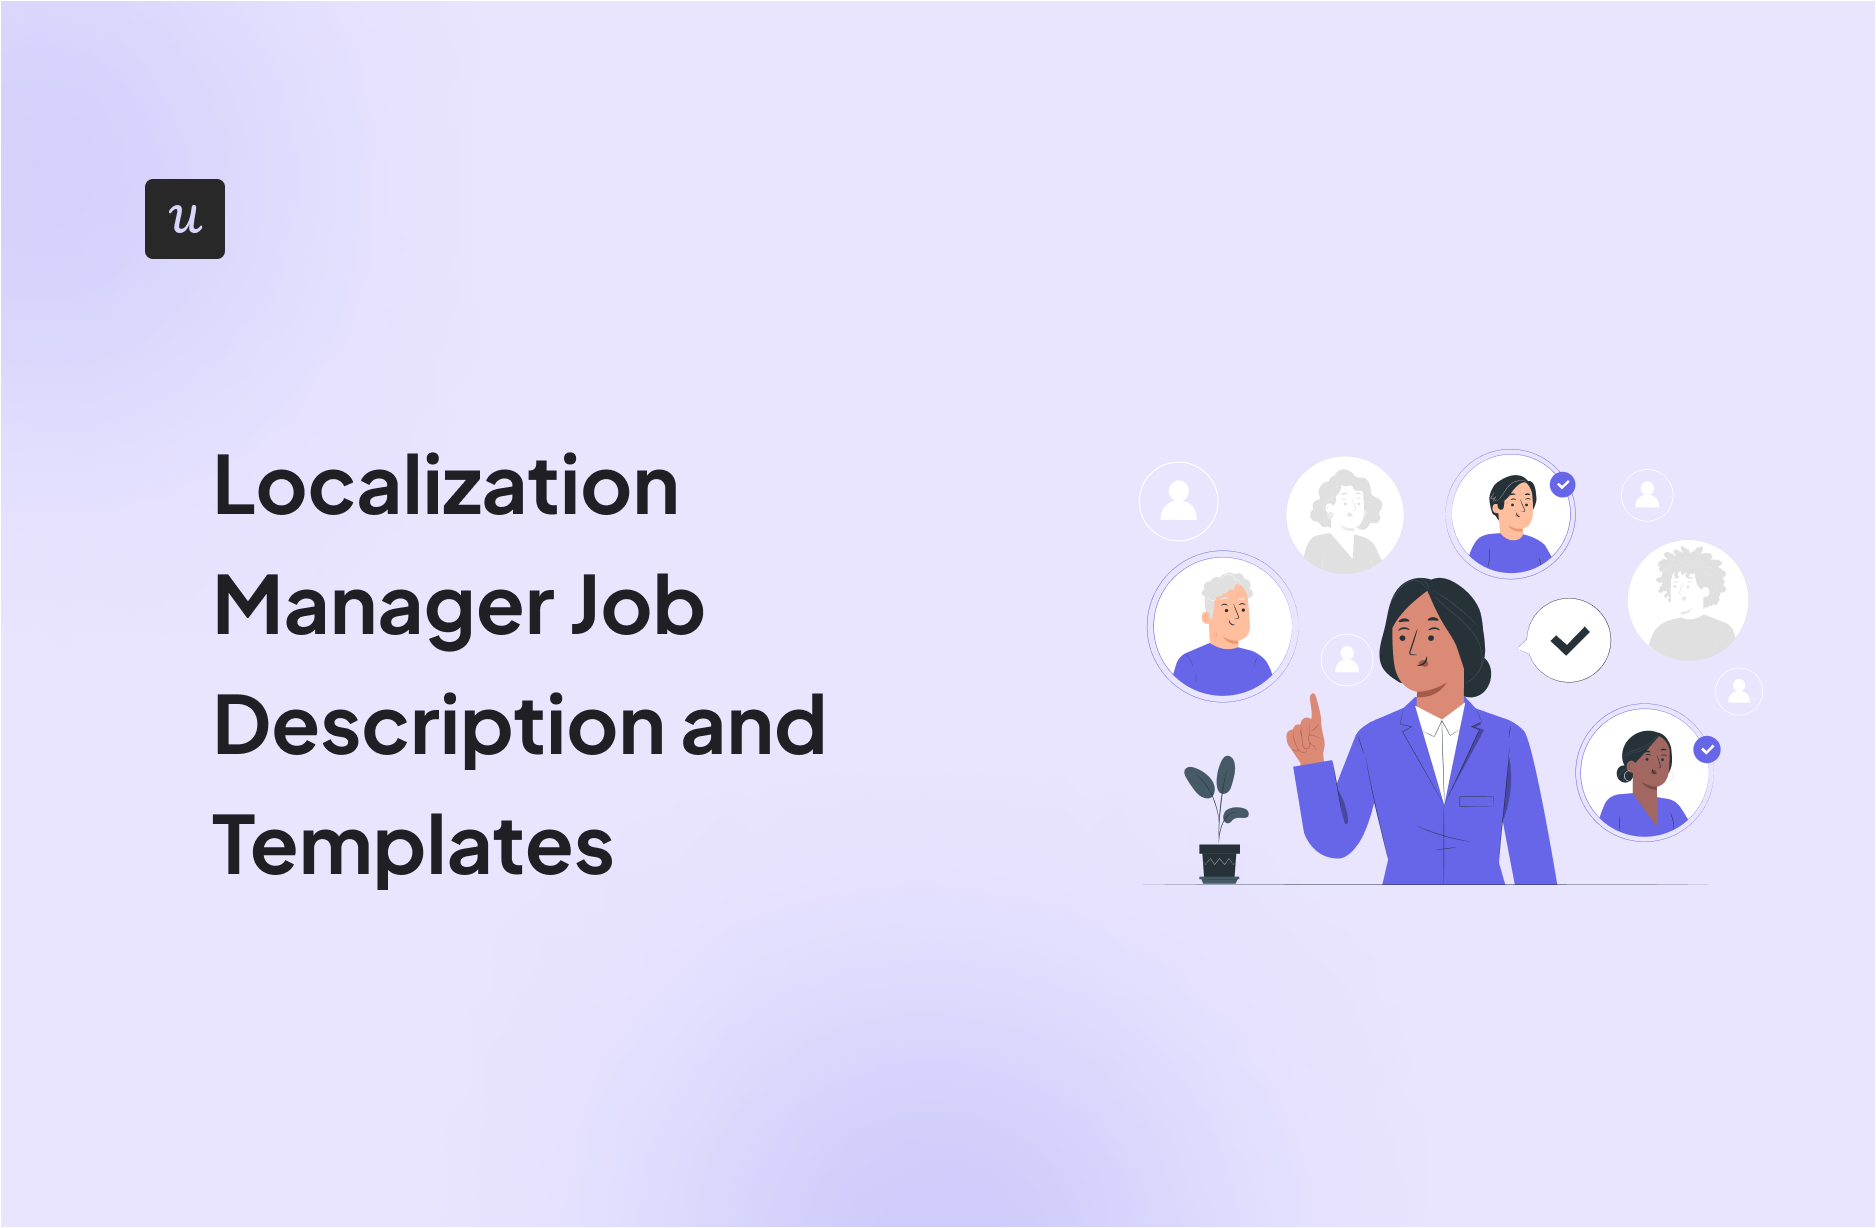 Localization Manager Job Description and Templates